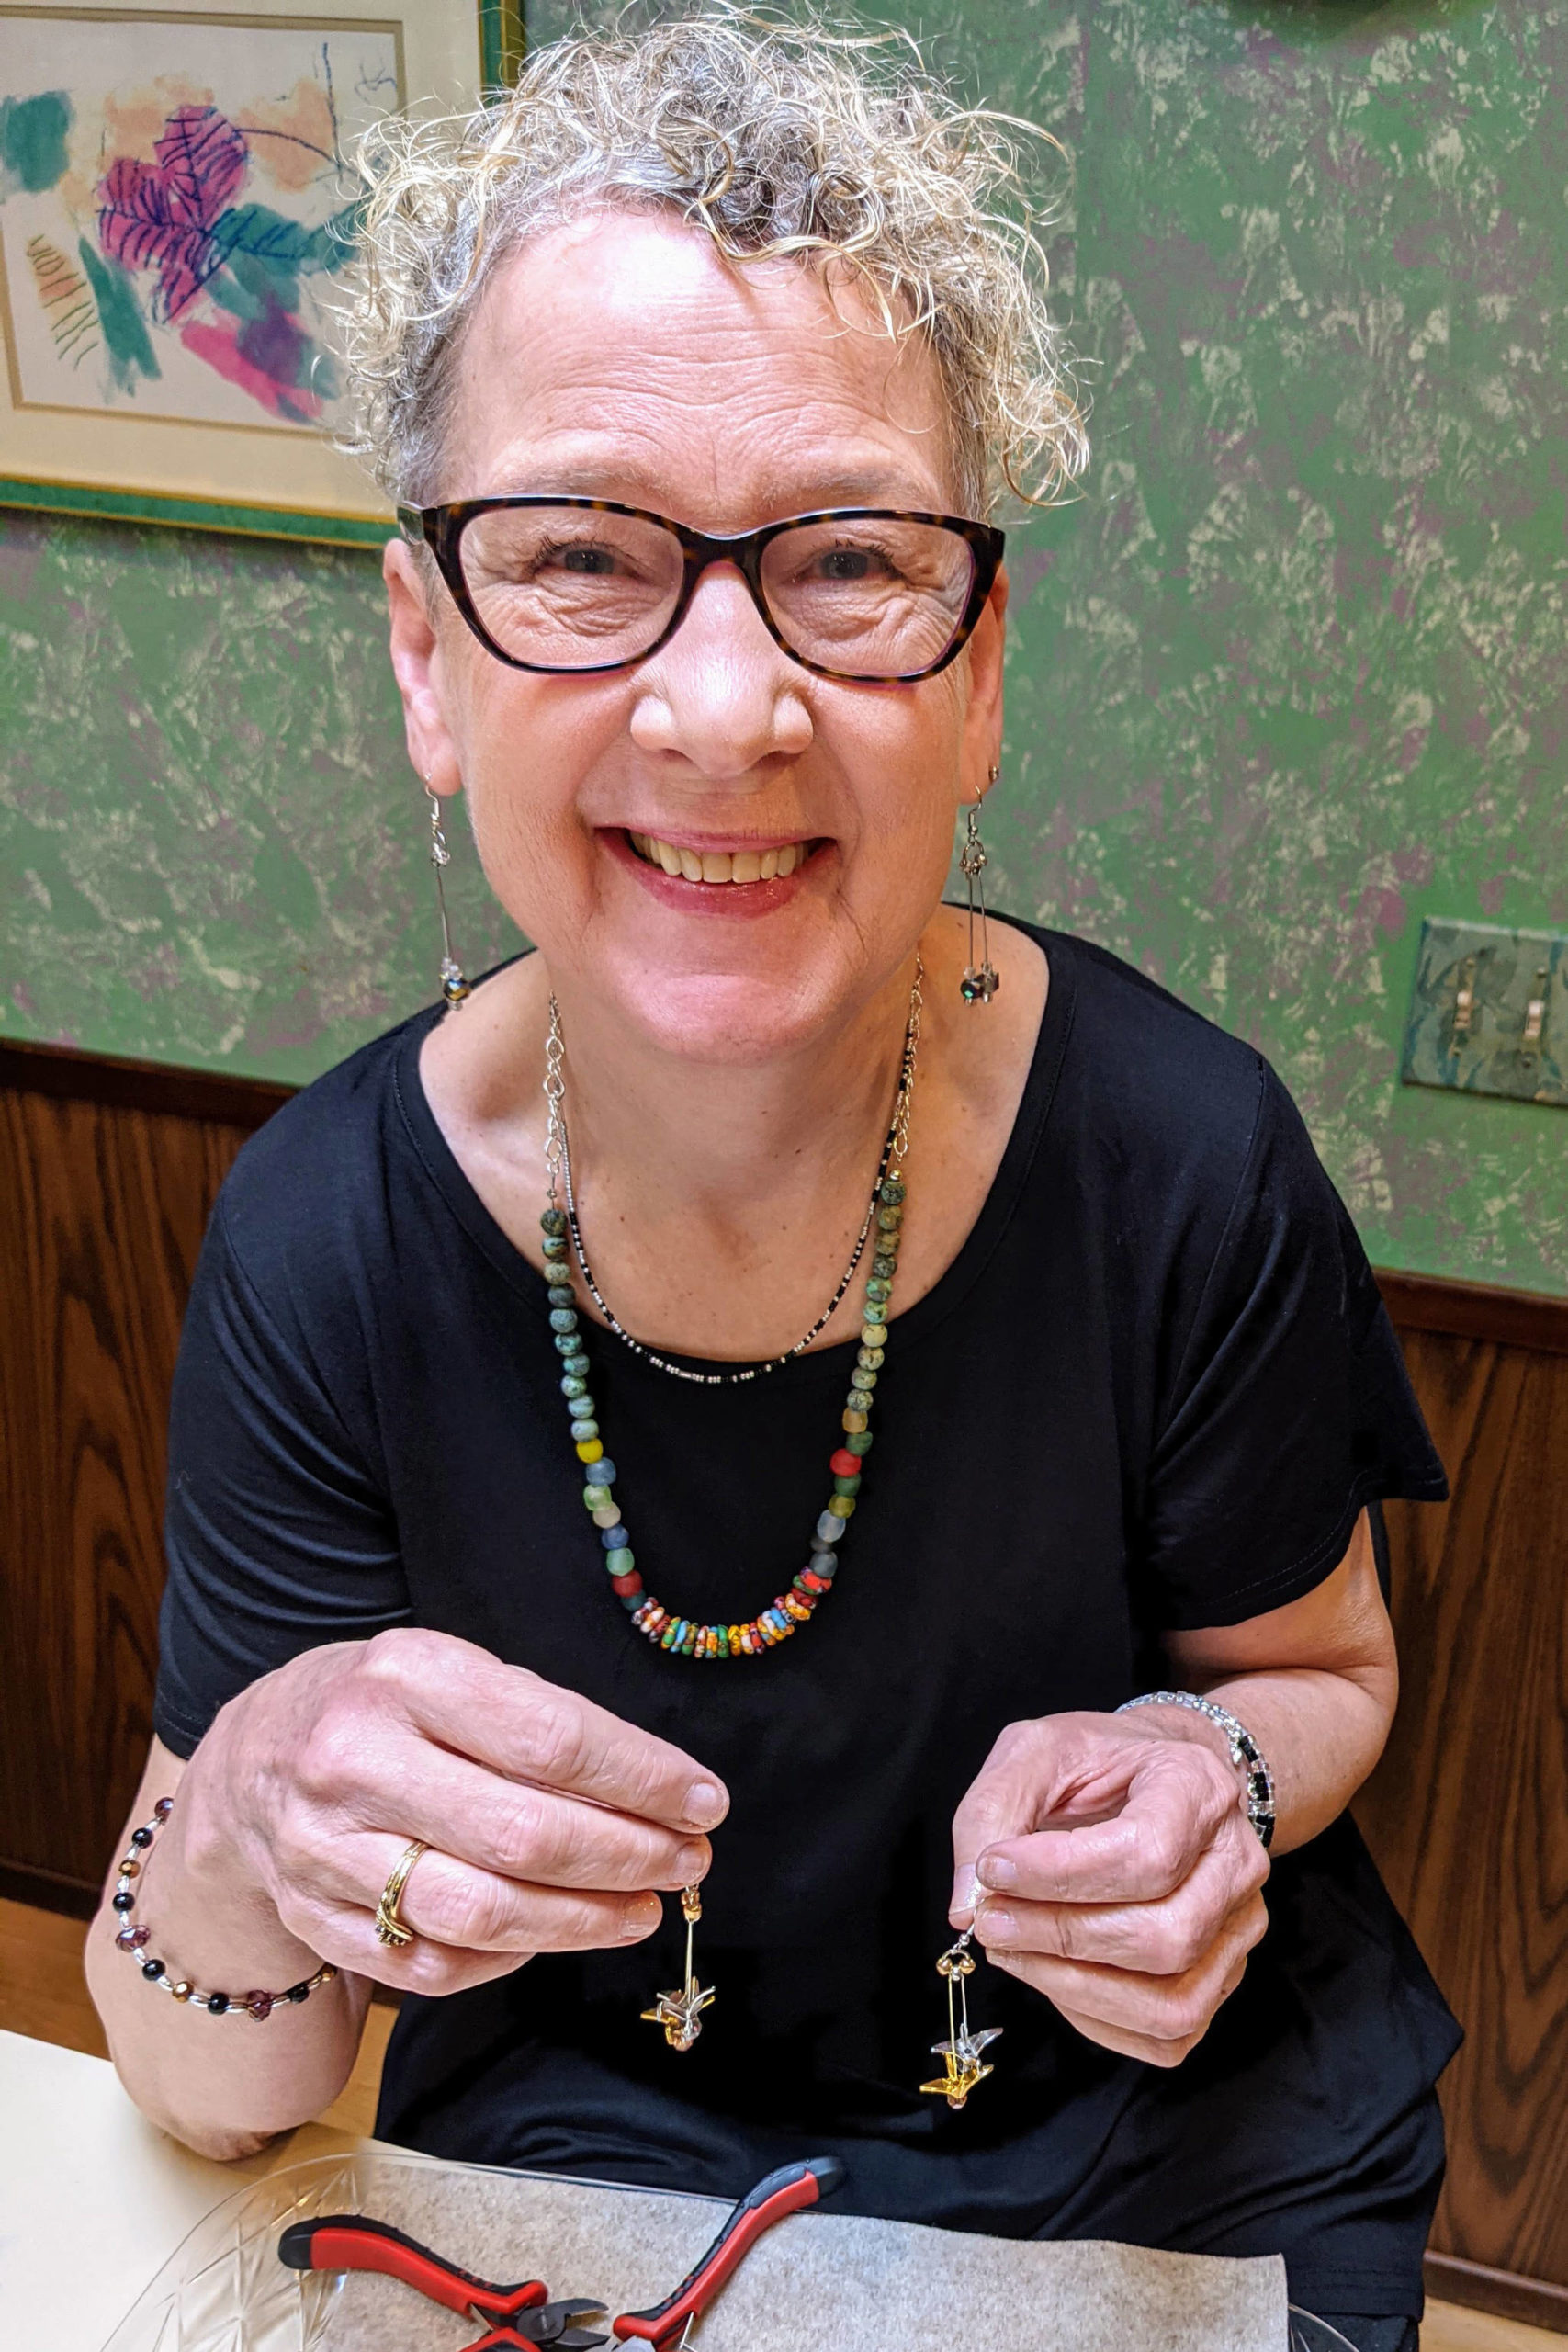 Liz Falconer smiling as she crafts jewelry (photo credit: Liz Falconer)